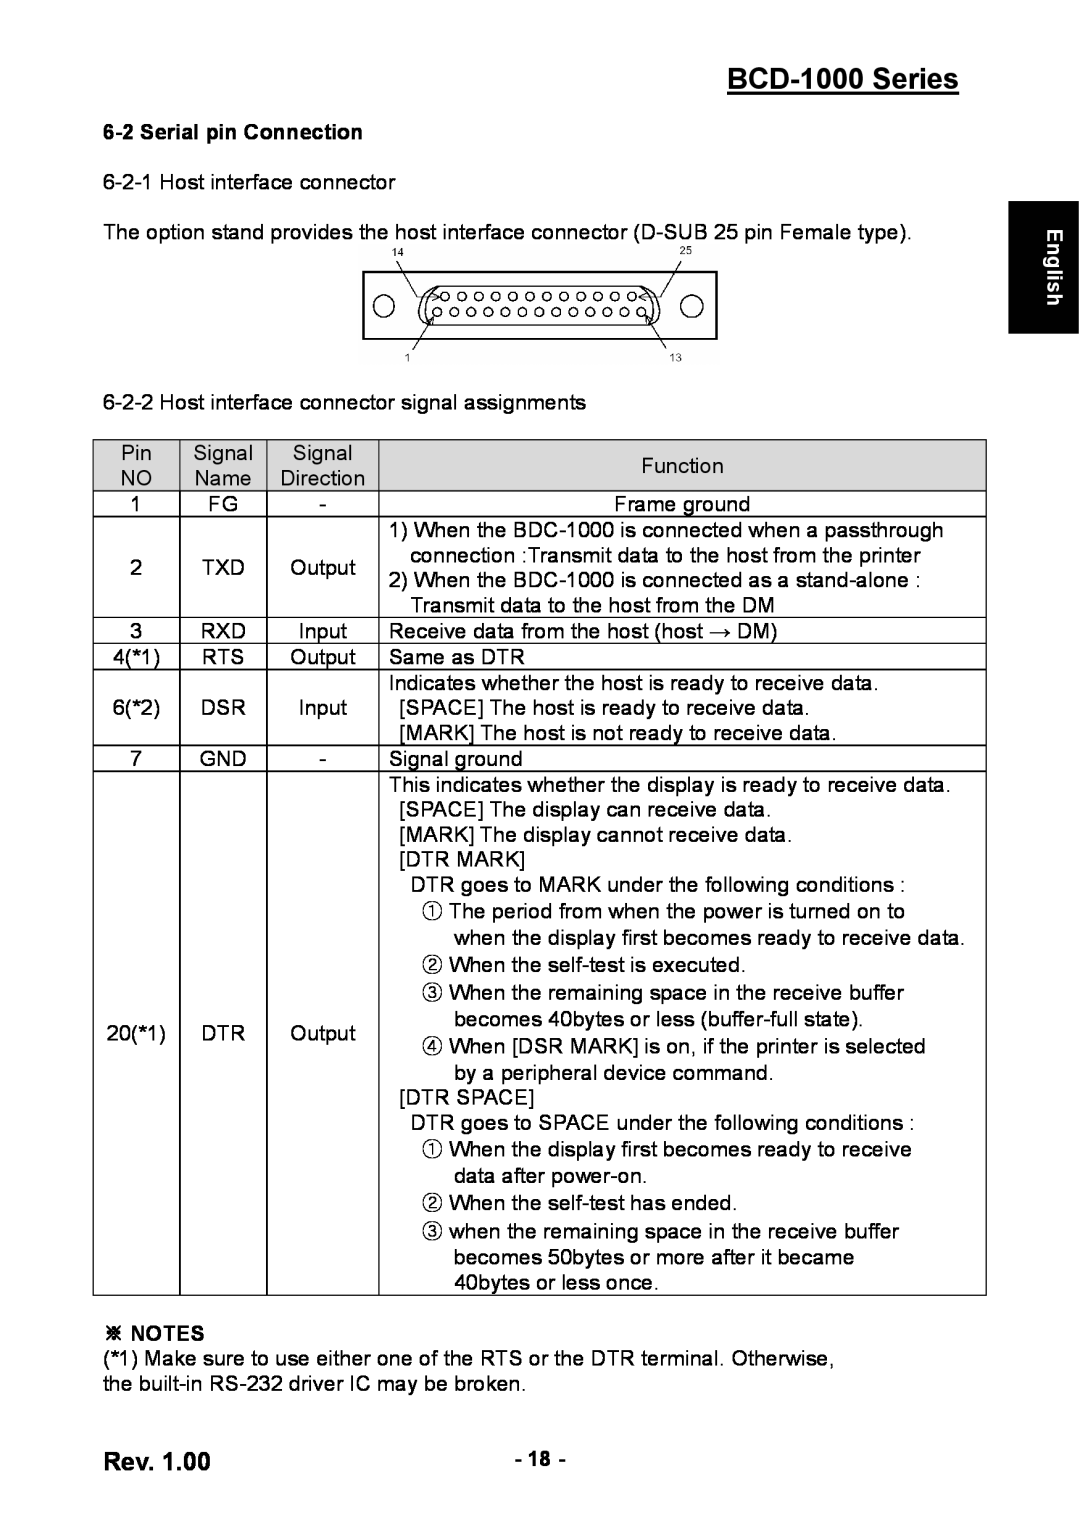 Samsung user manual Serial pin Connection, BCD-1000 Series, English, ※ Notes 